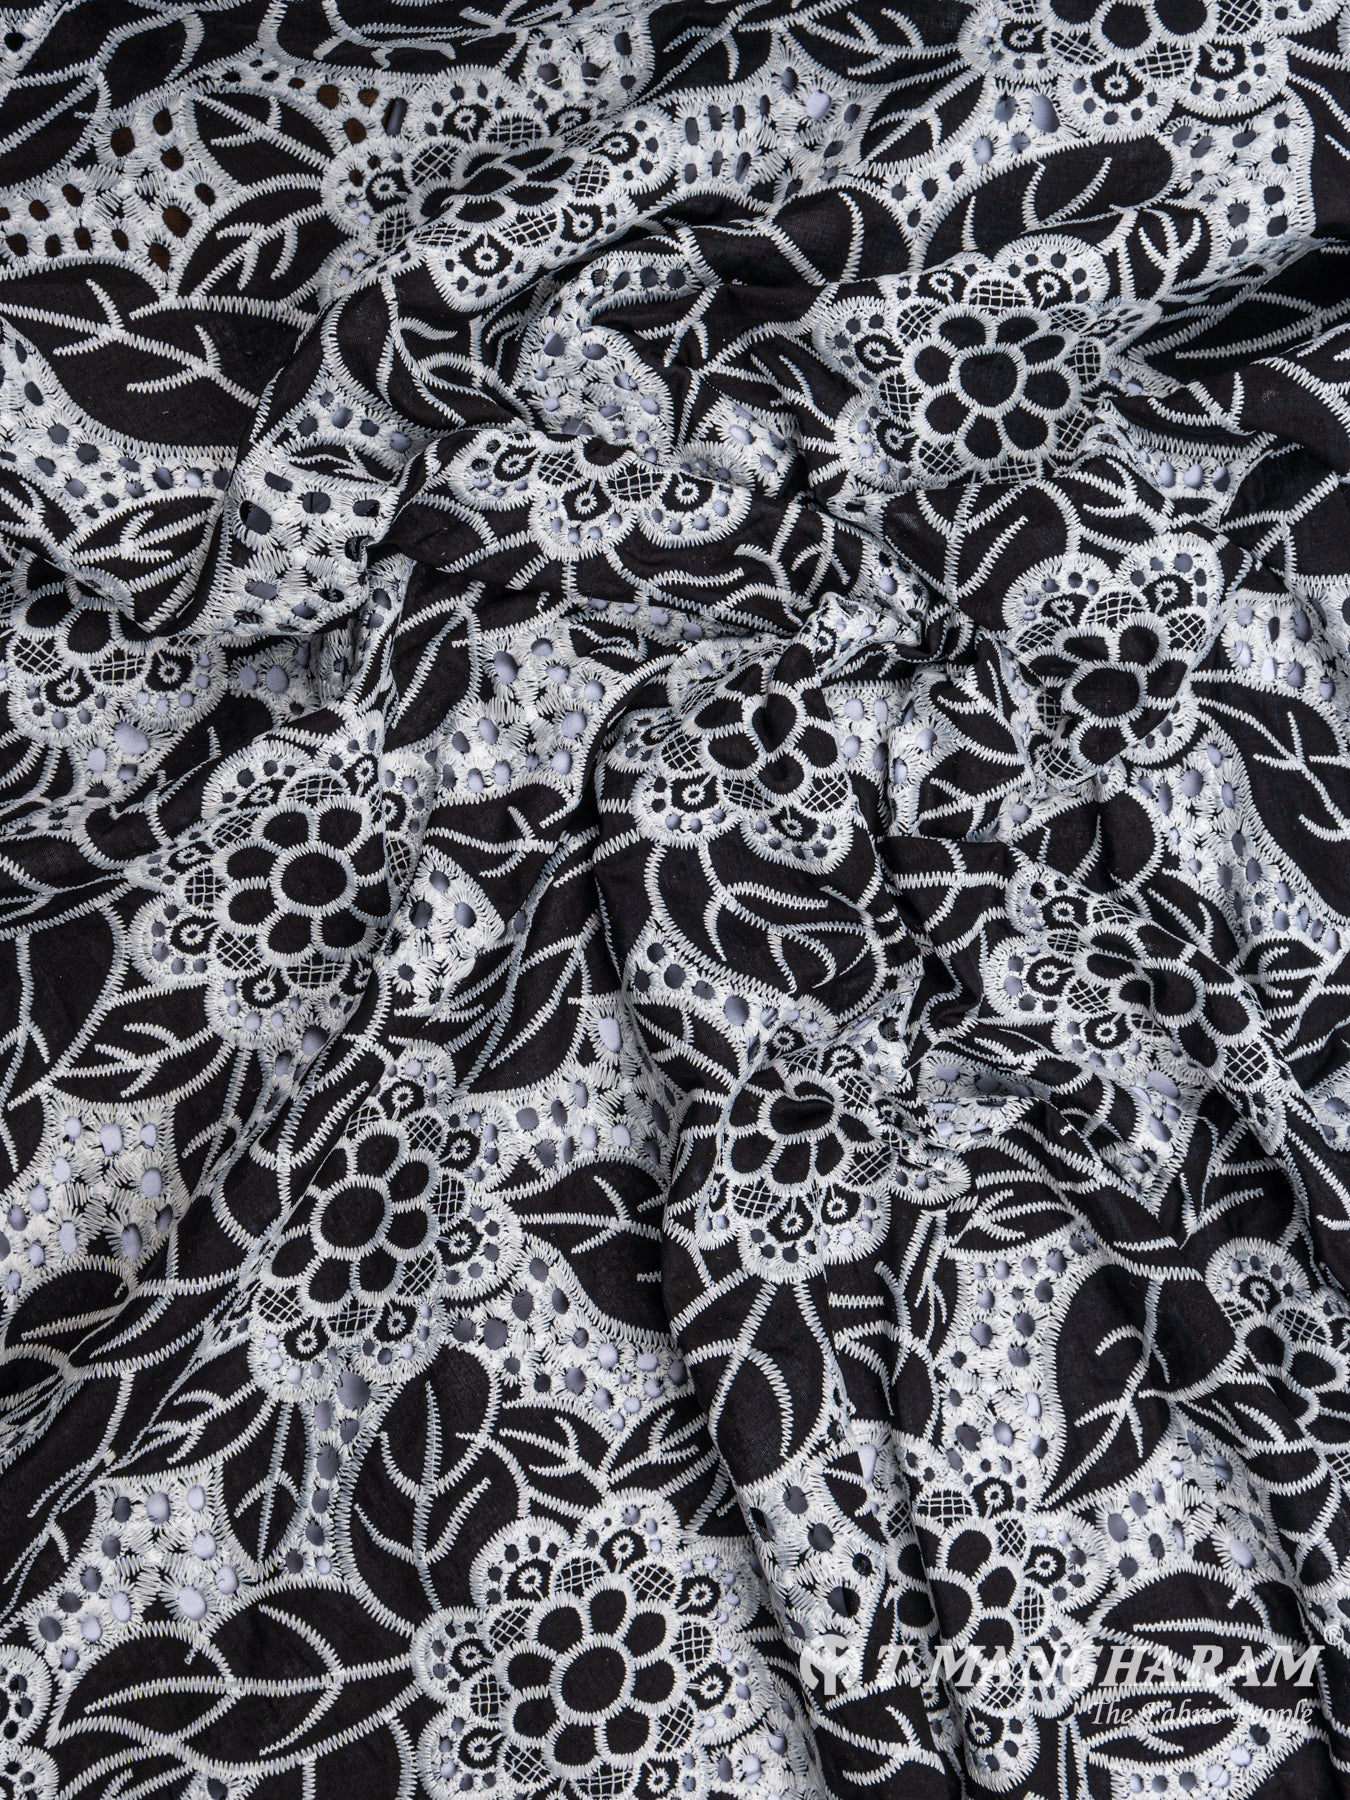 Black Cotton Embroidery Fabric - EA1694 view-4